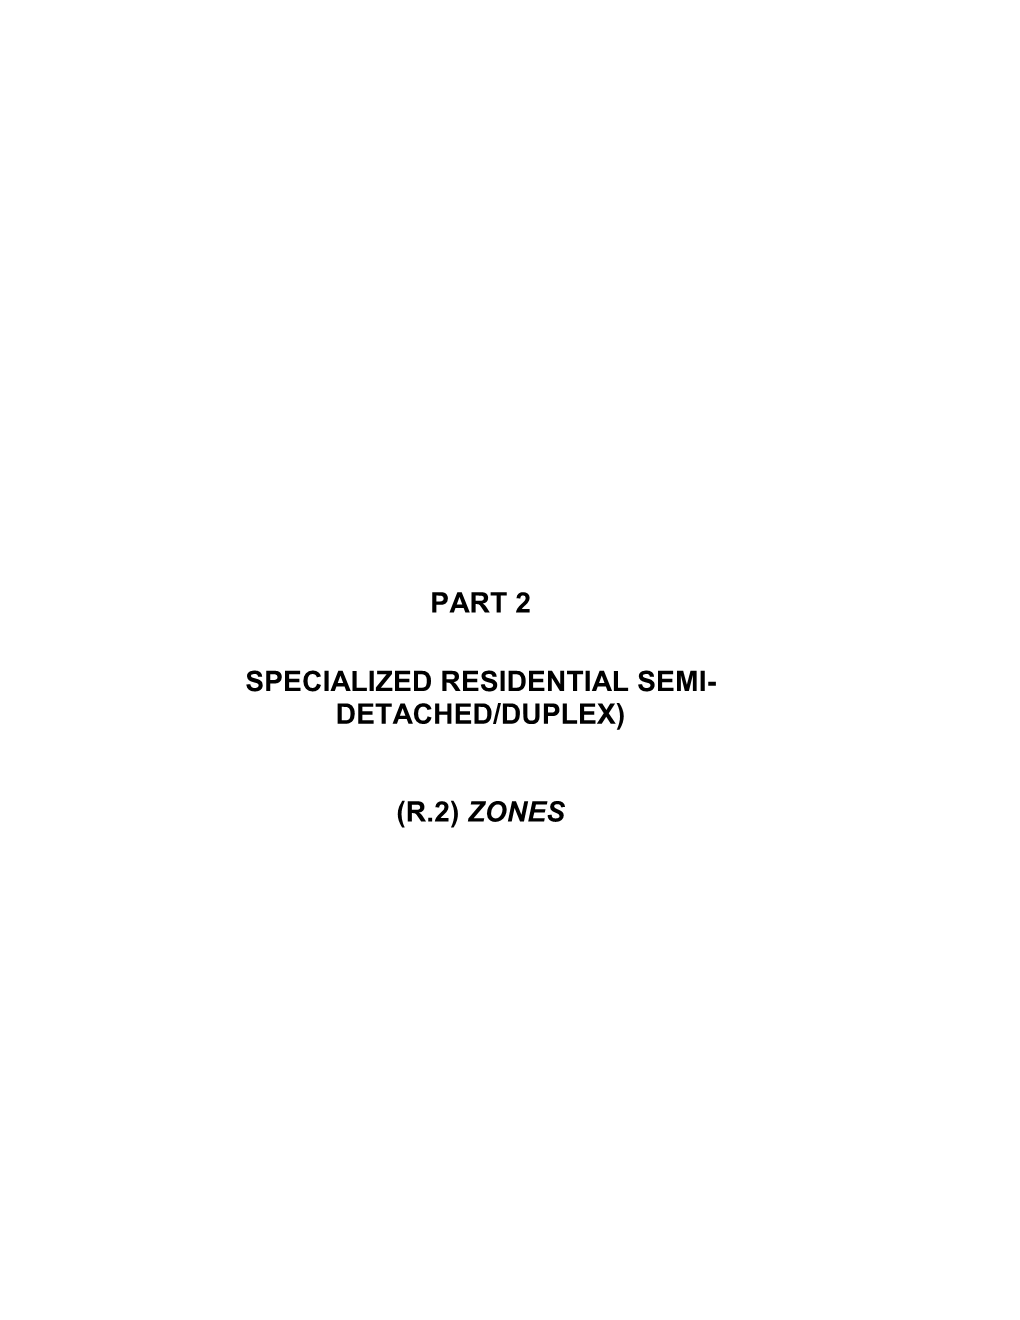 Part 2 Specialized Residential Semi- Detached/Duplex) (R.2) Zones